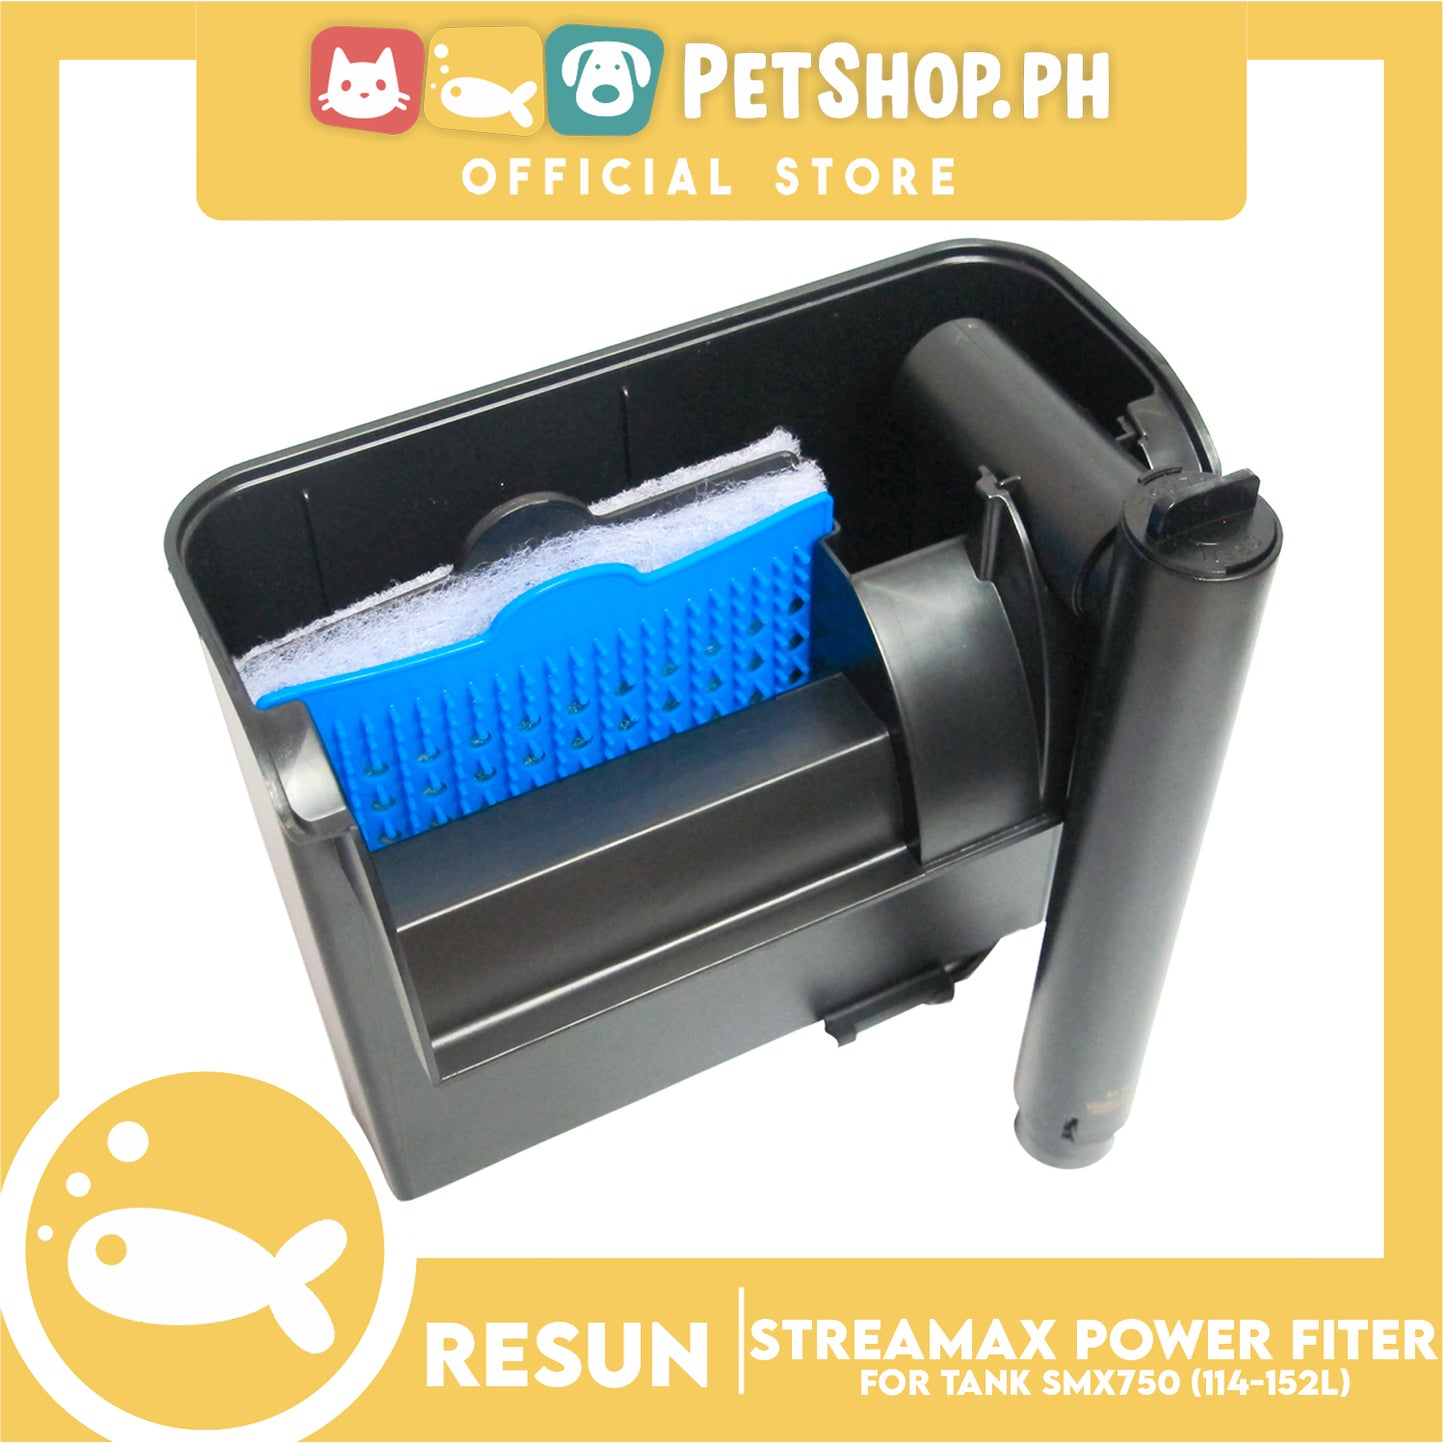 Resun Streamax Power Filter SMX750